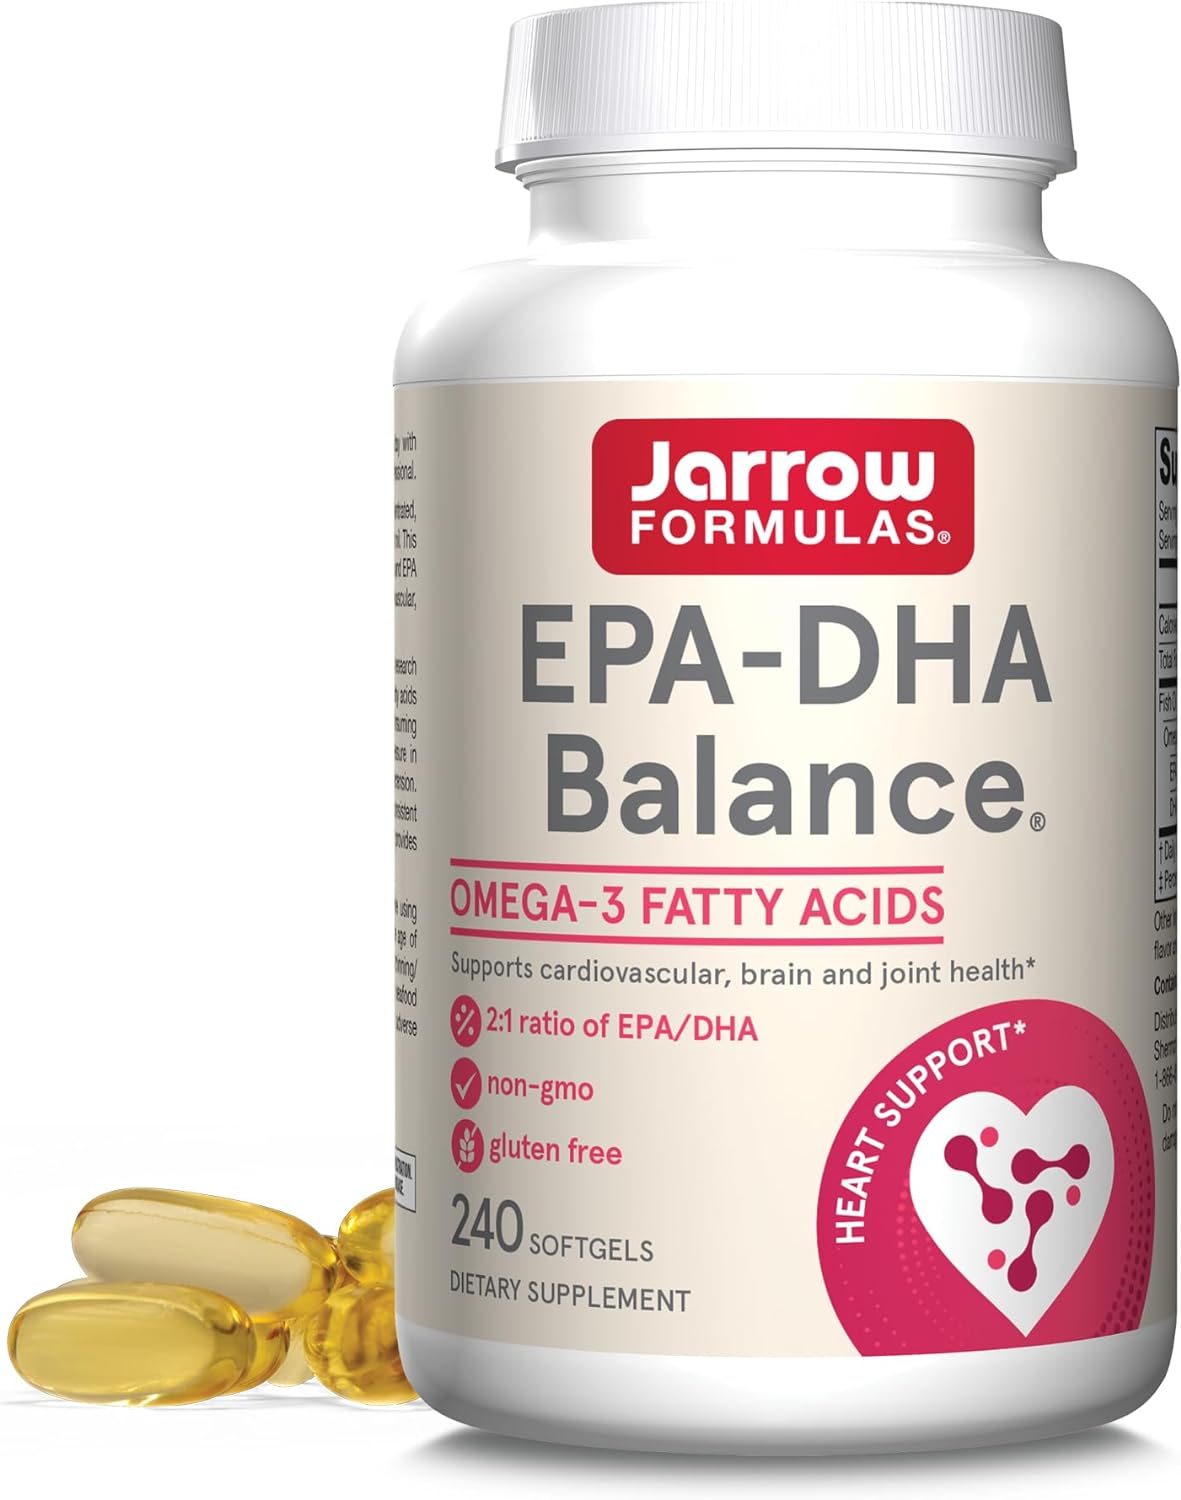 Jarrow Formulas EPA-DHA Balance Odorless Caps, Boosts Brain Function, 240 Softgels